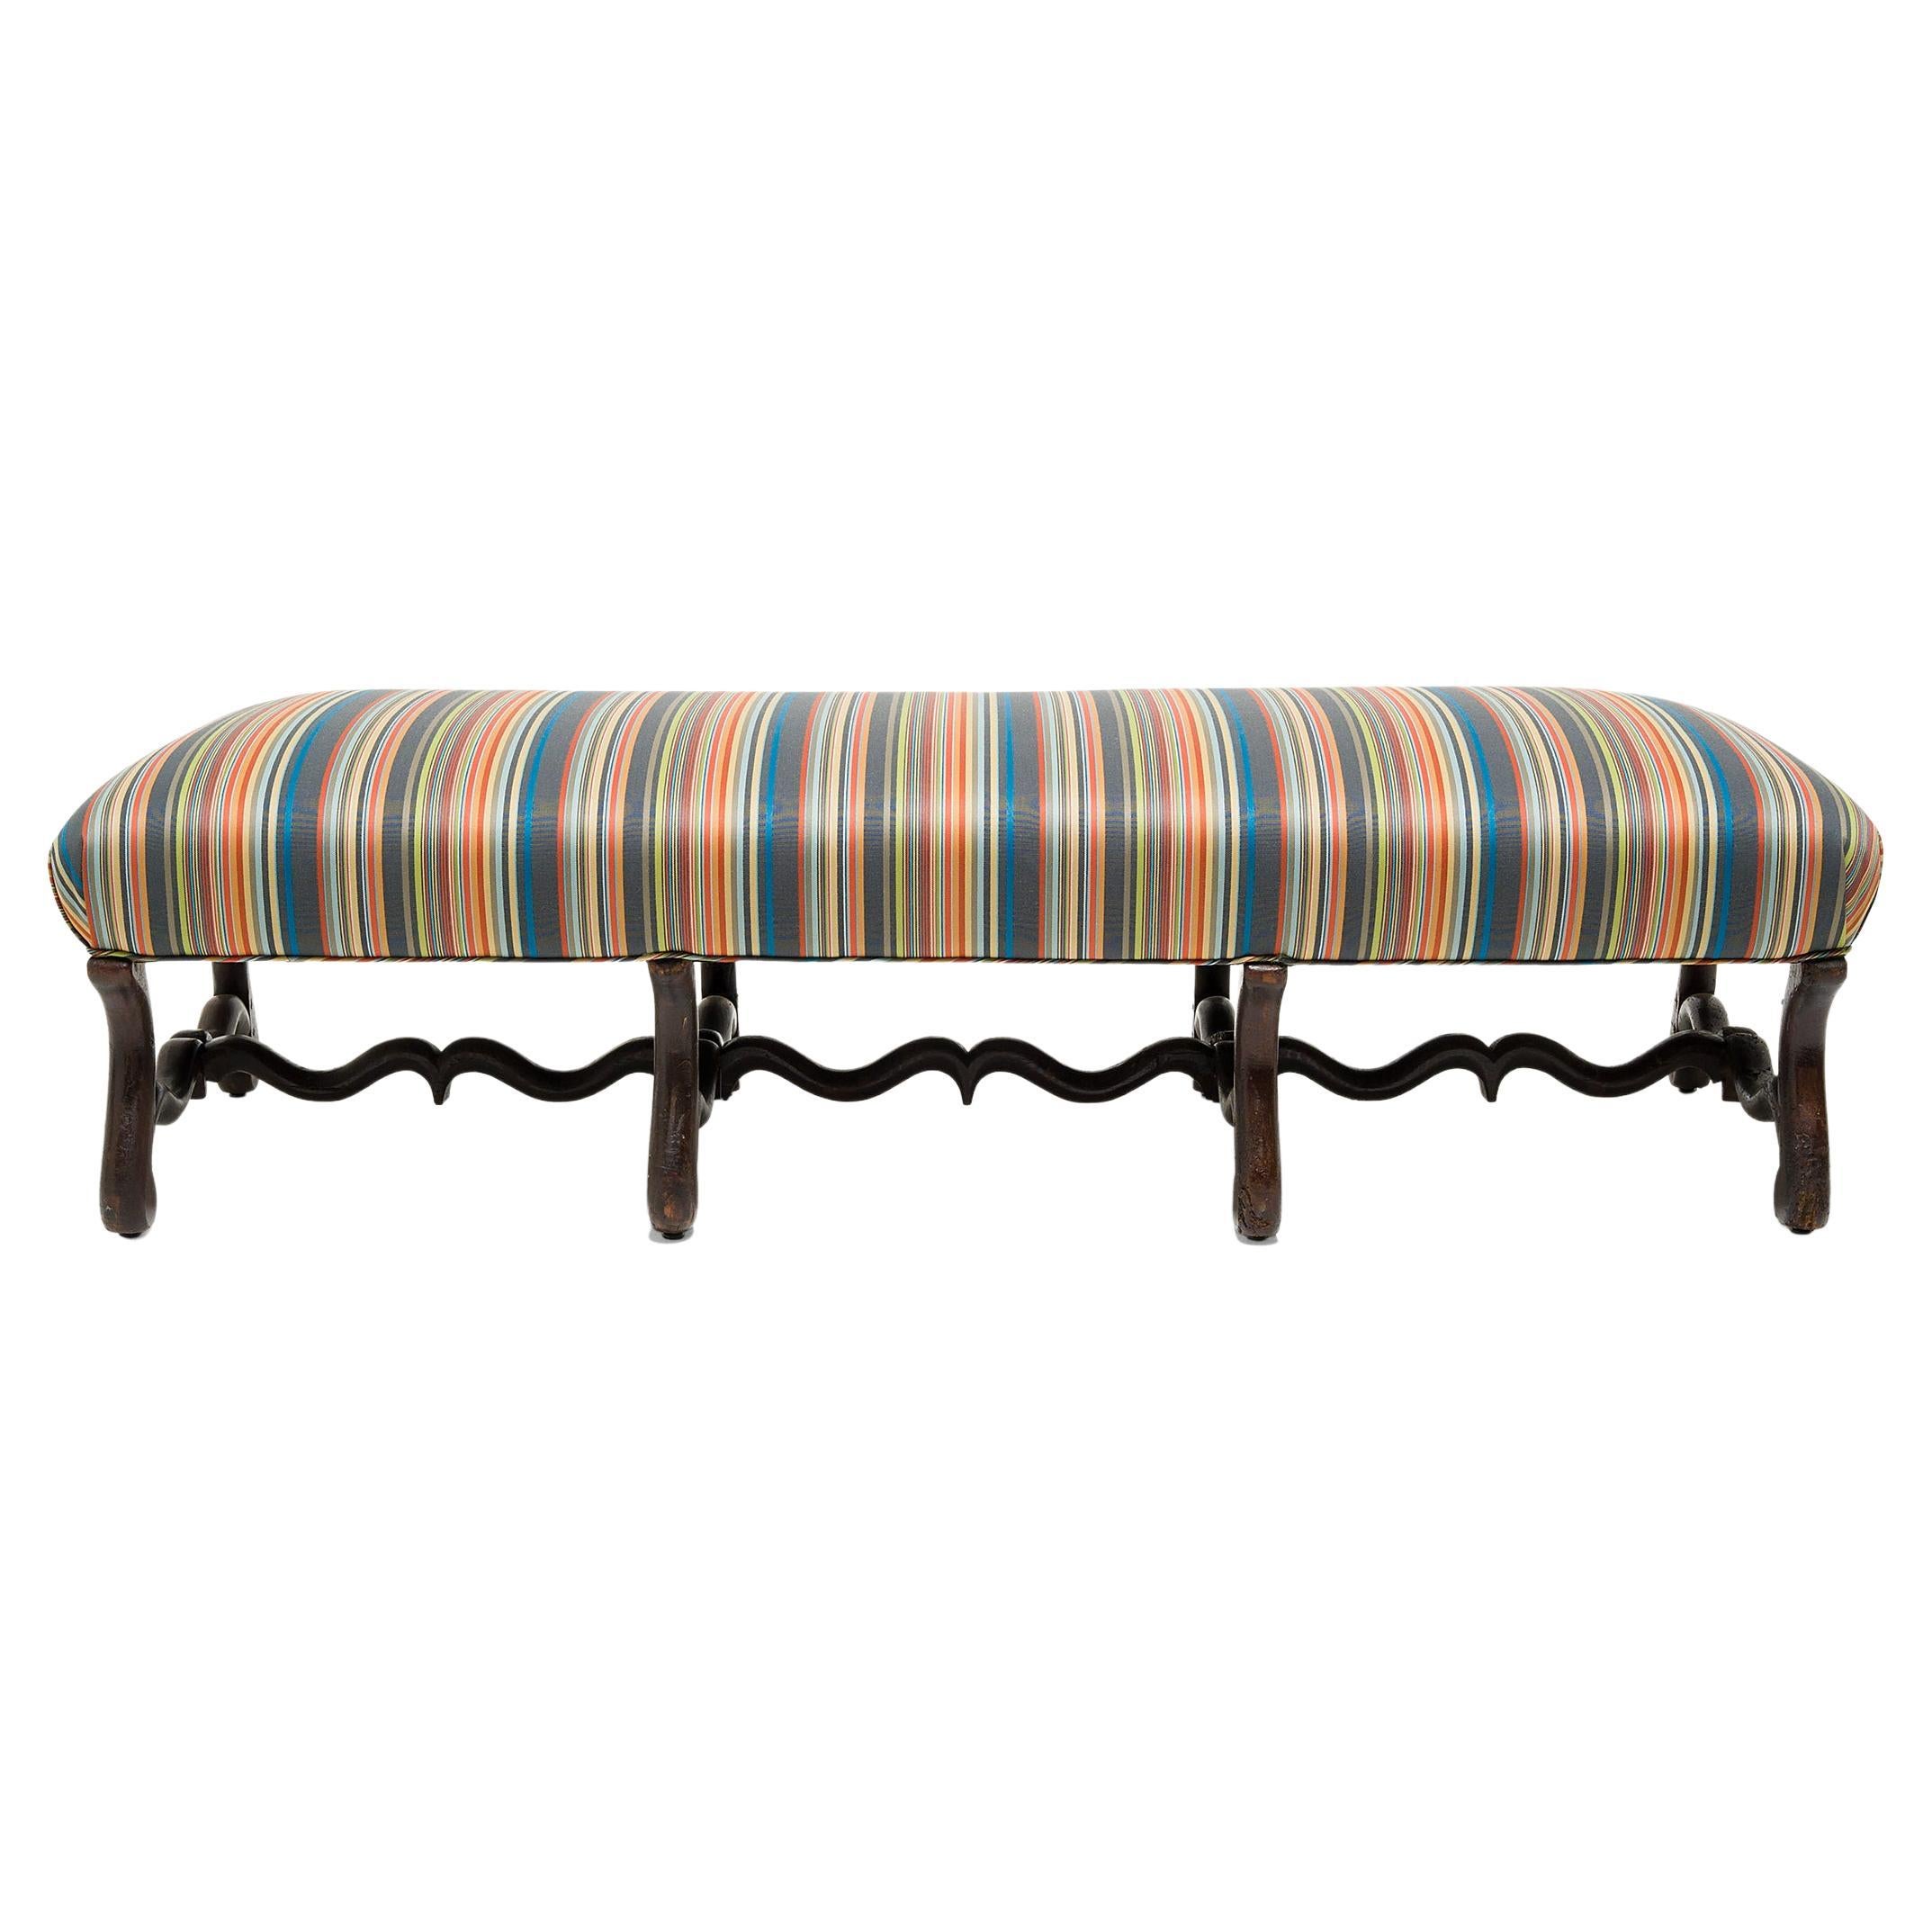 Long Upholstered Os de Mouton Bench, c. 1800 For Sale